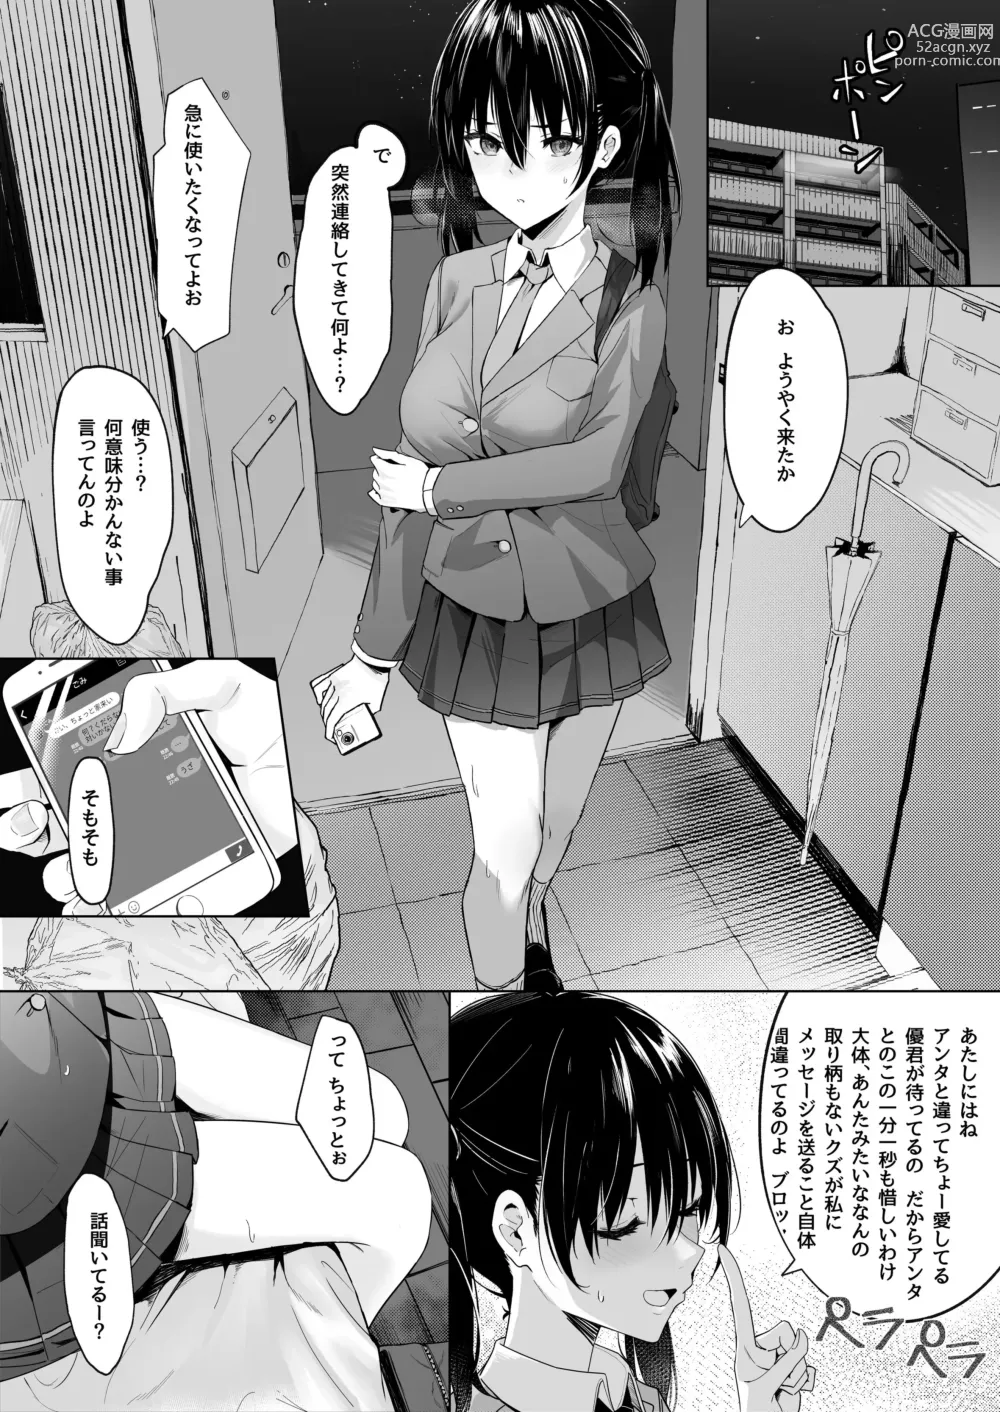 Page 3 of doujinshi Apologies!